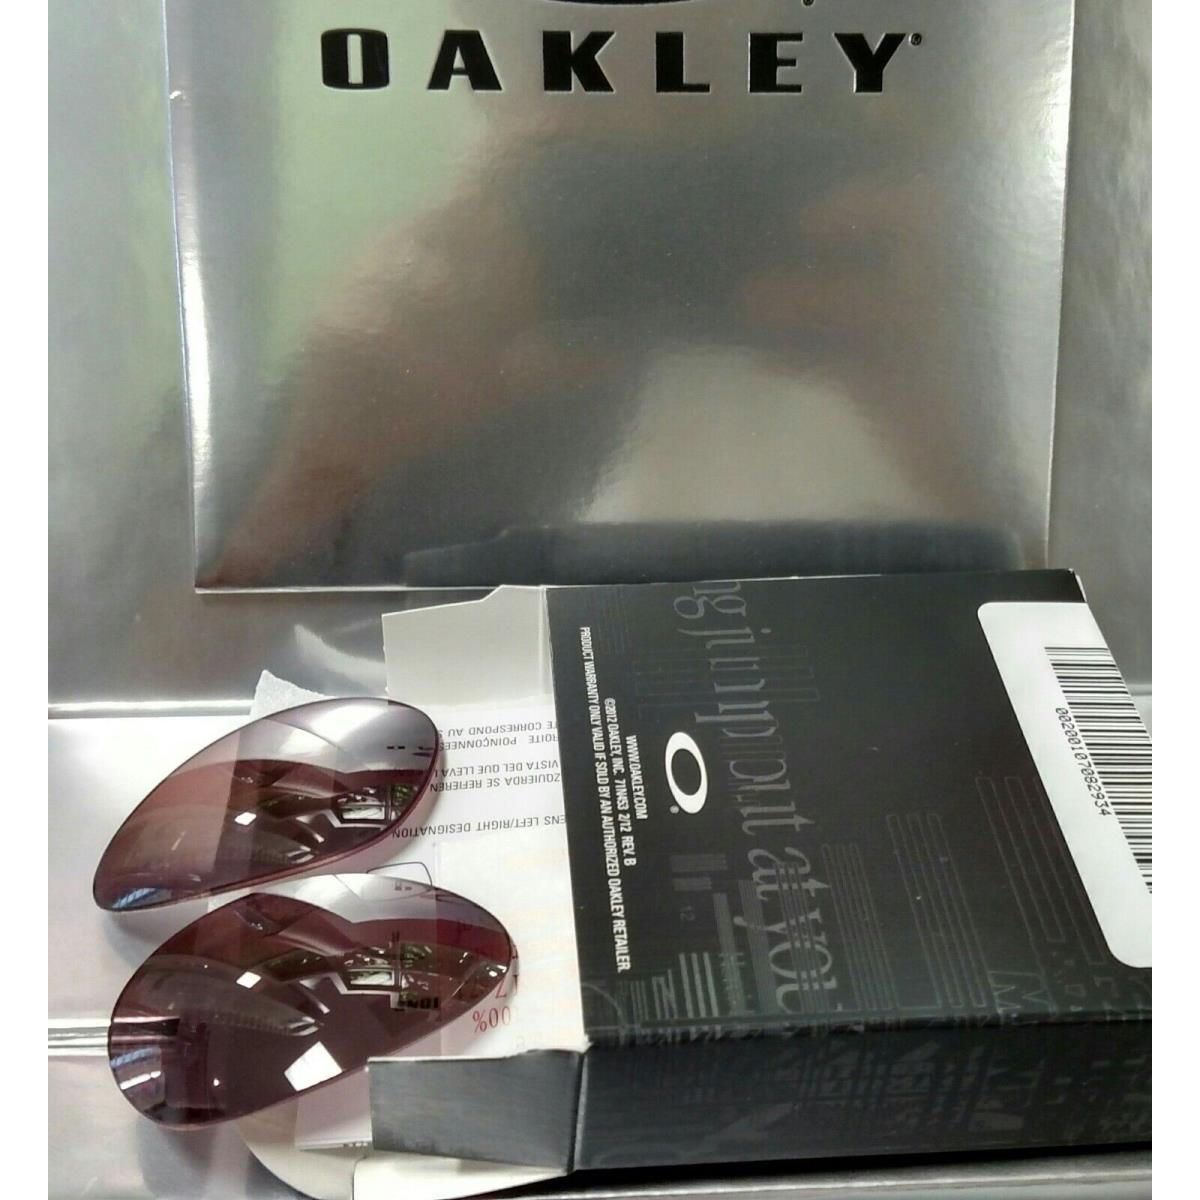 Compatible lenses for Oakley Penny